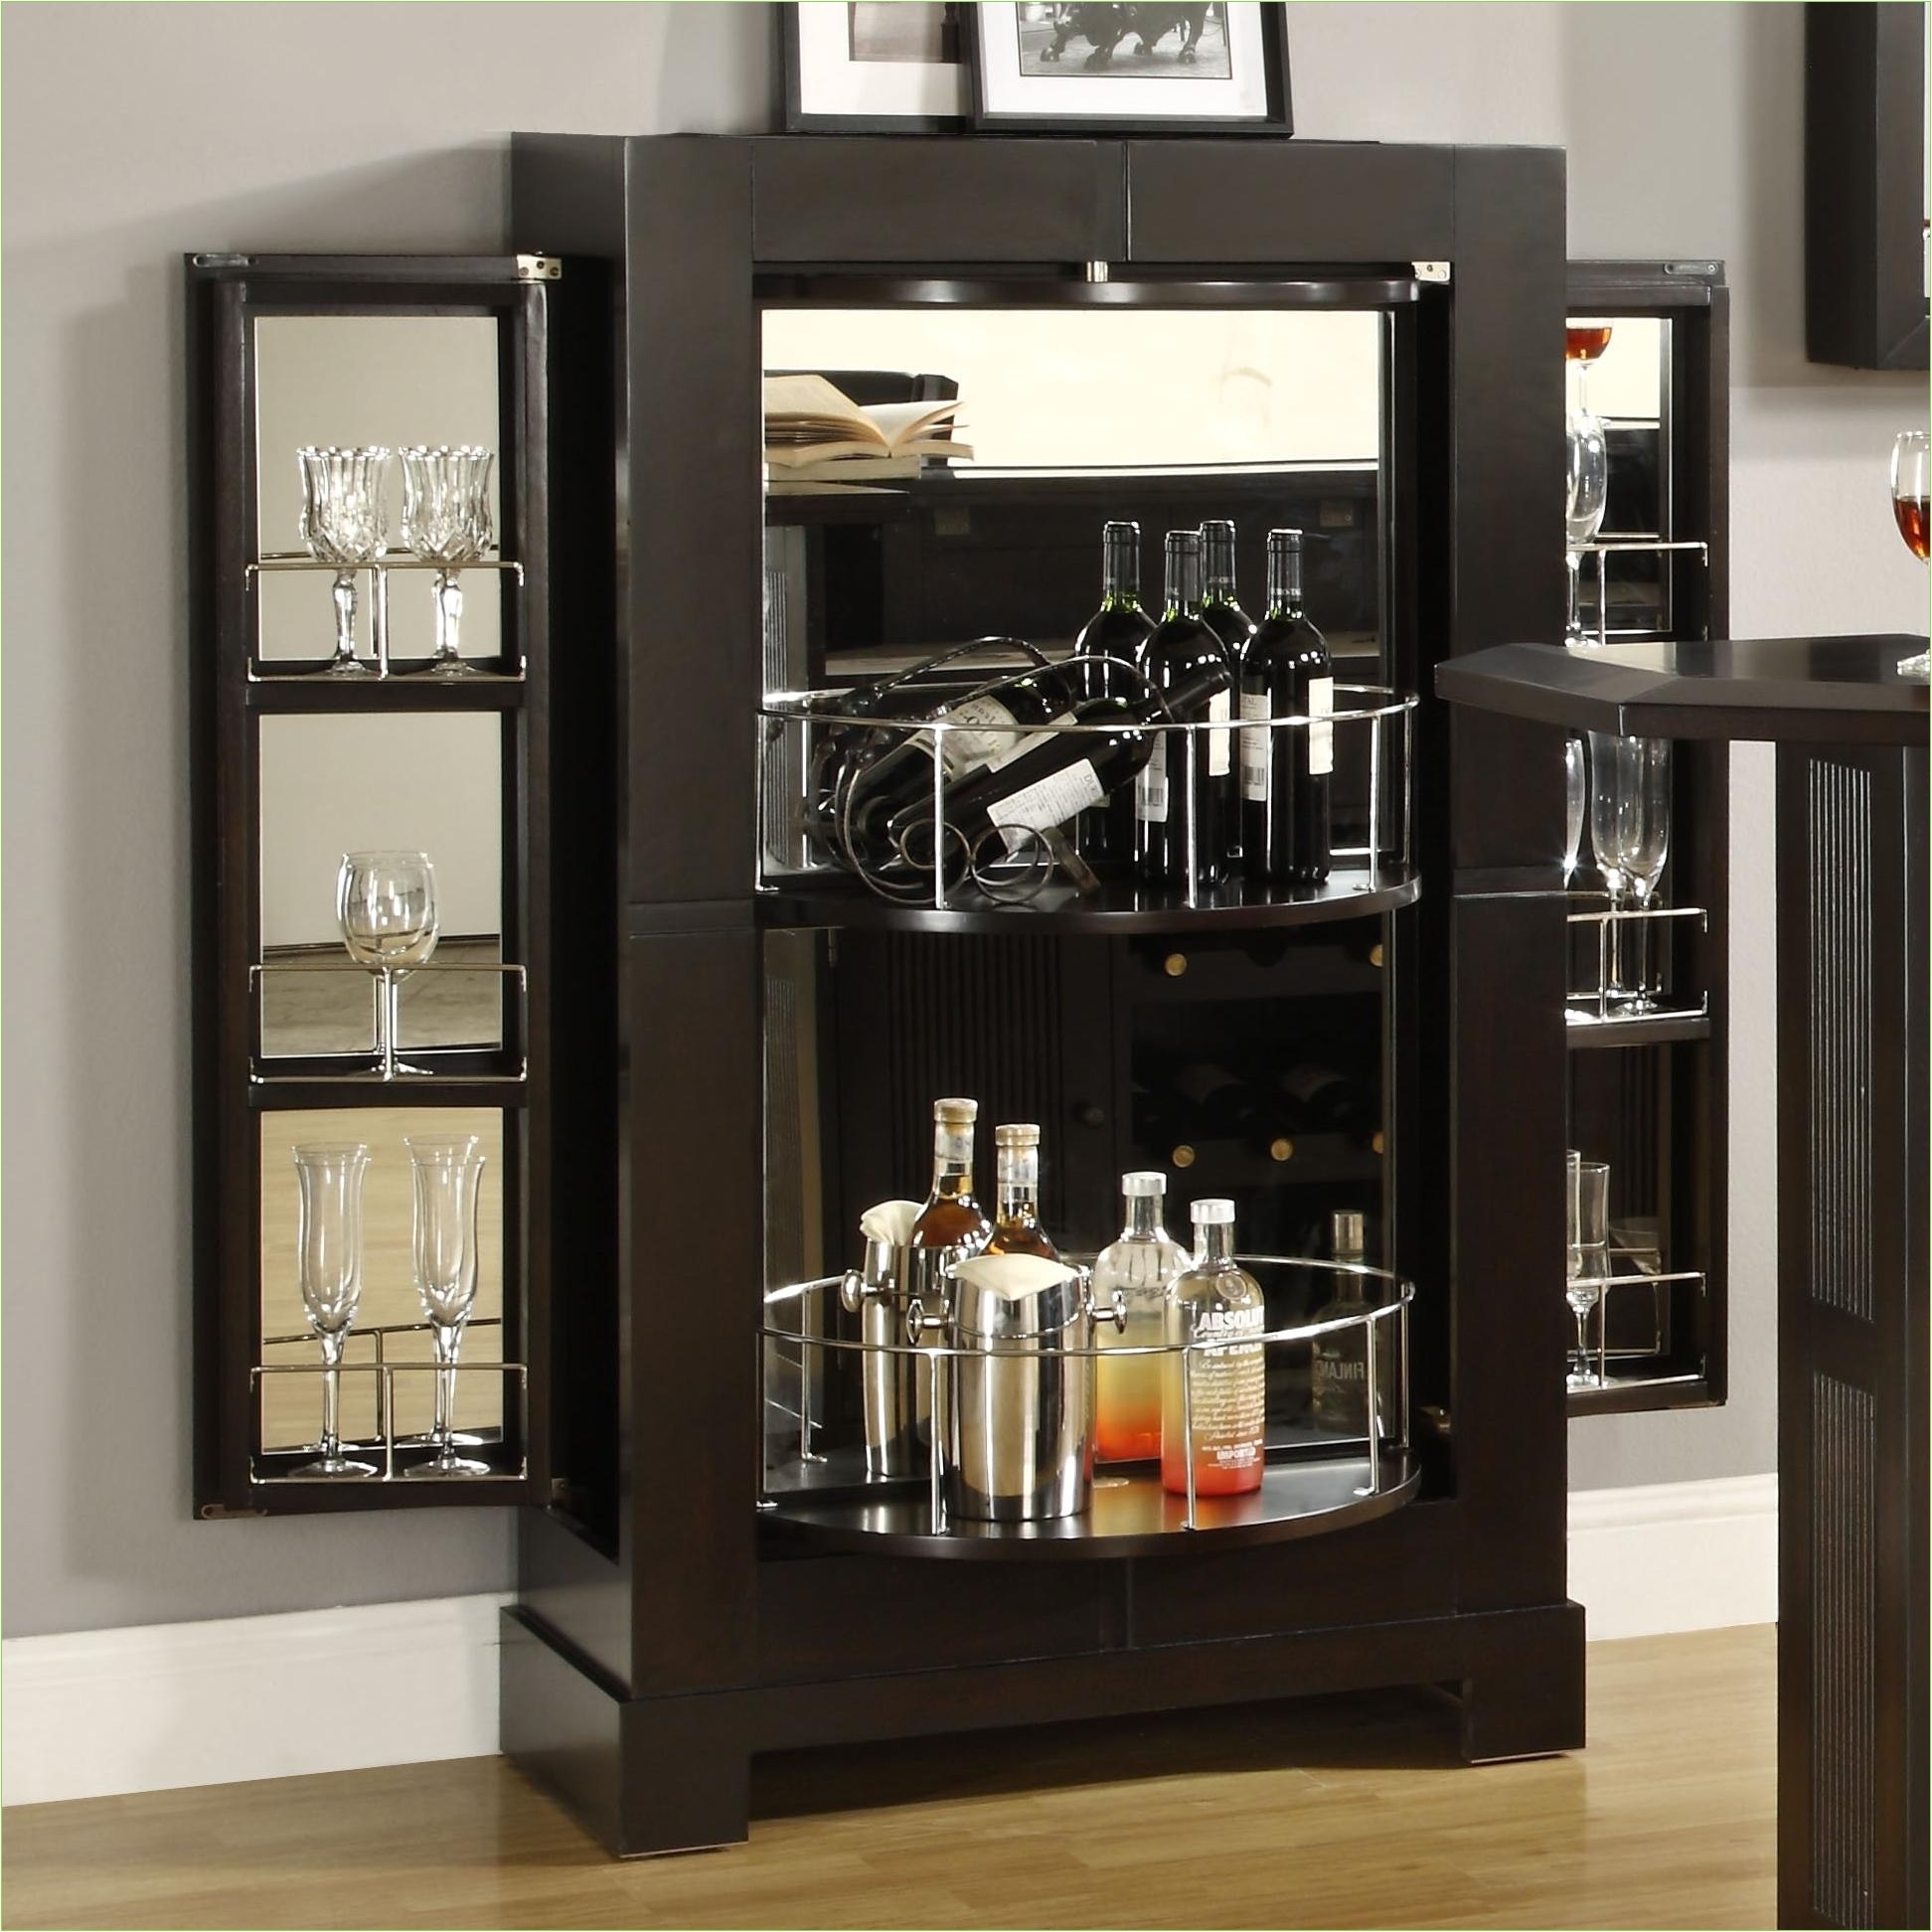 wine rack furniture inspirational wood wine cabinet bar furniture of best of wine rack furniture lovely